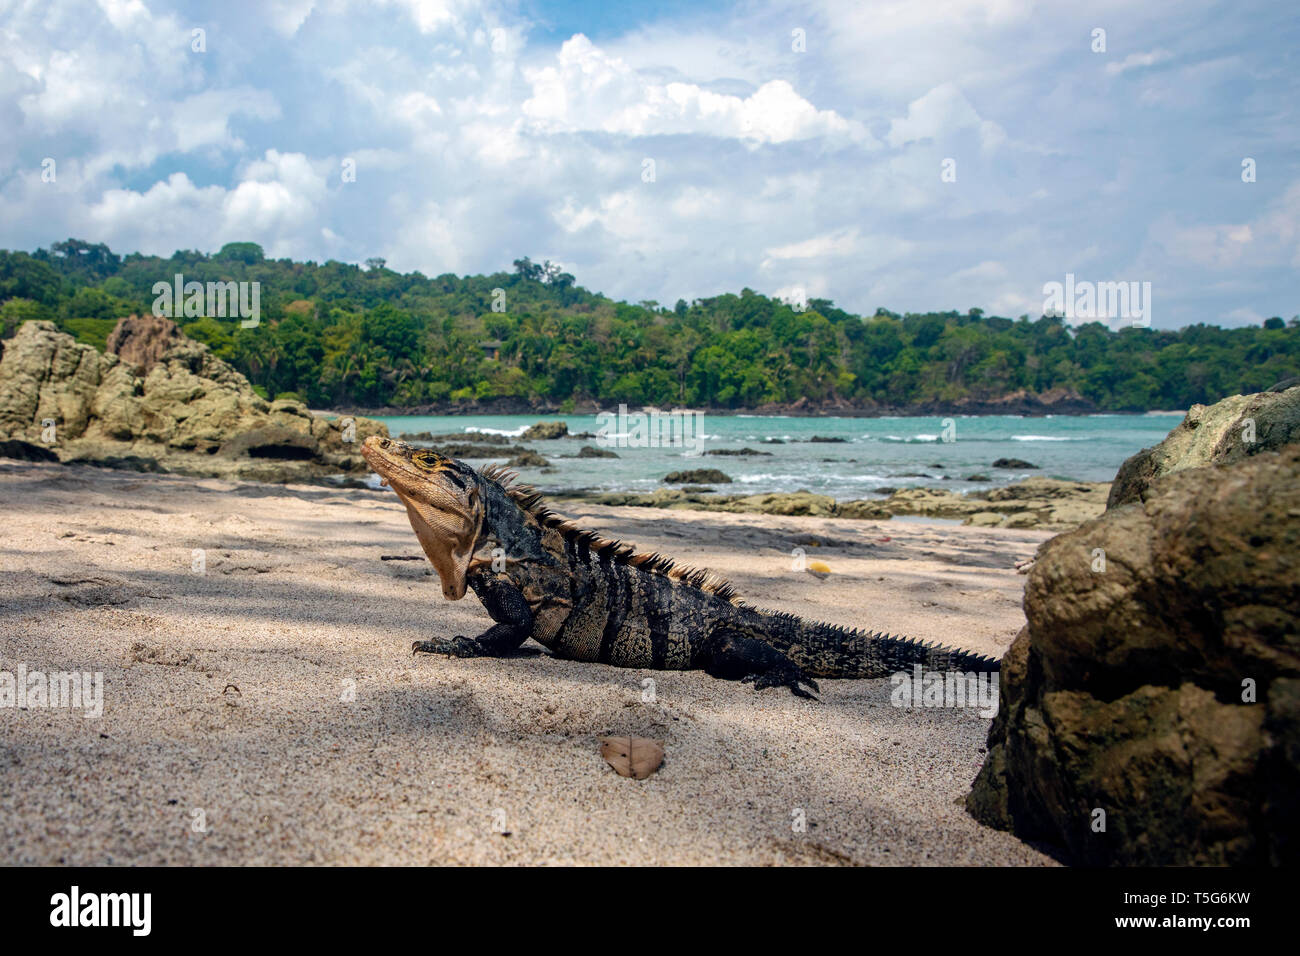 Spinosa nero-tailed iguana (Ctenosaura similis) - Playa Manuel Antonio Manuel Antonio National Park - Quepos, Costa Rica Foto Stock